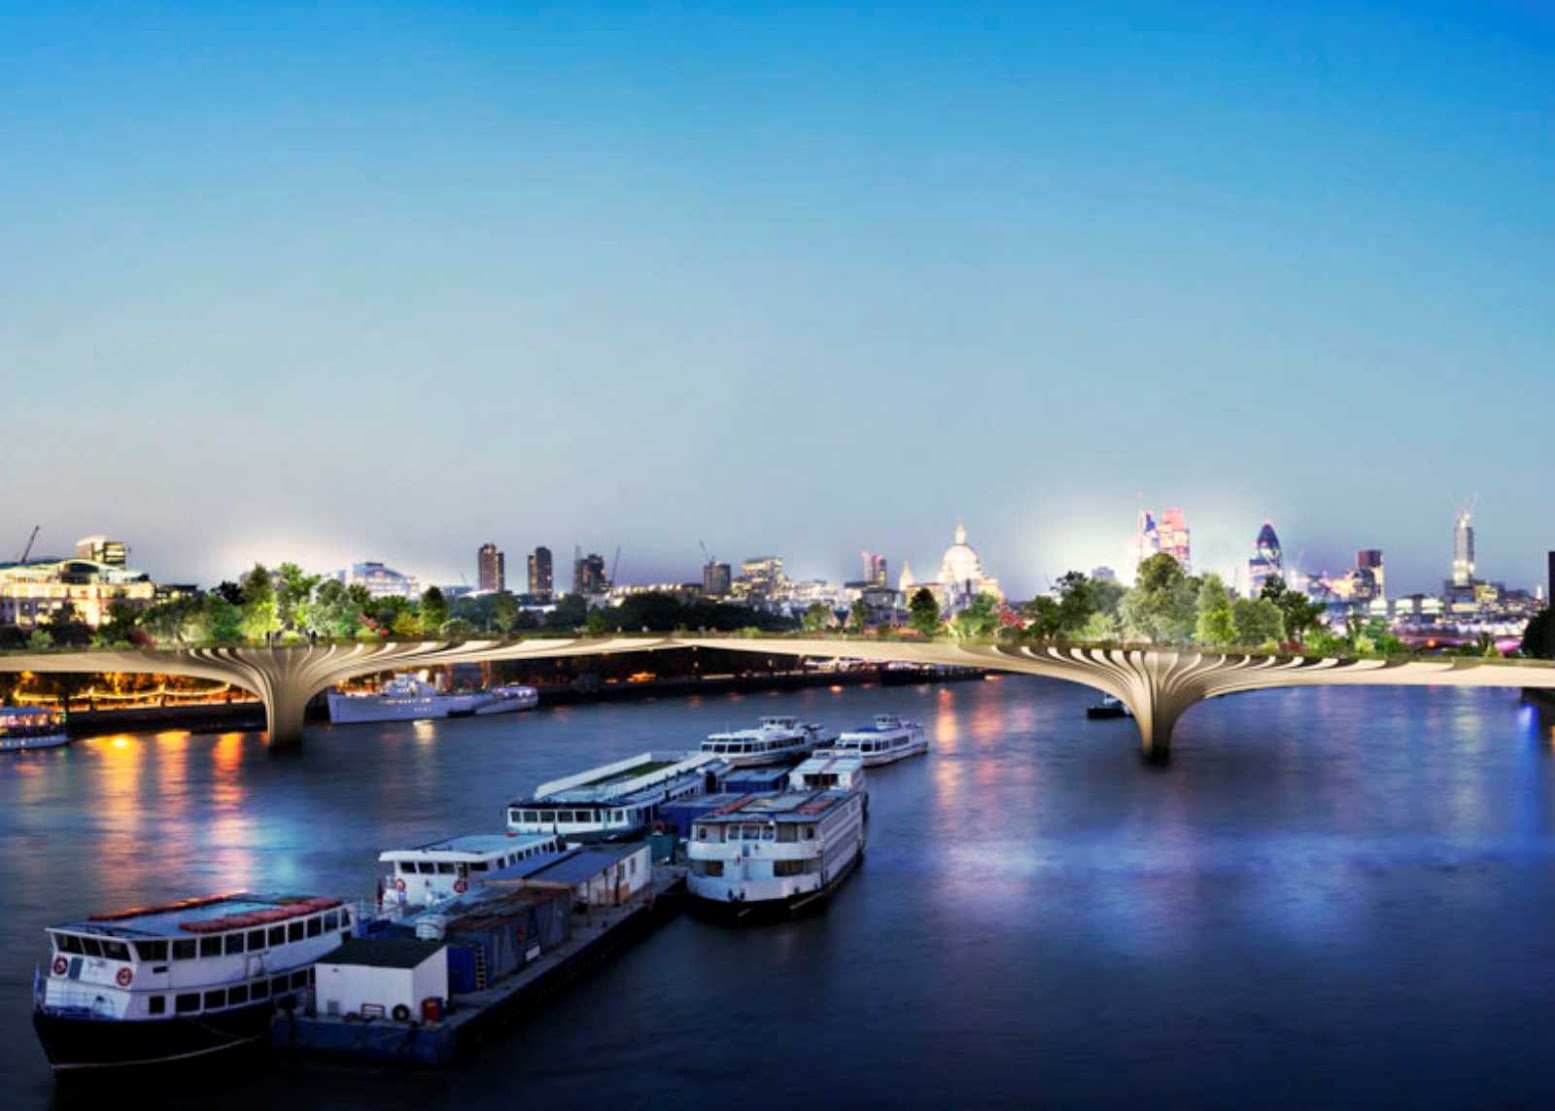 Garden Bridge for London by Thomas Heatherwick